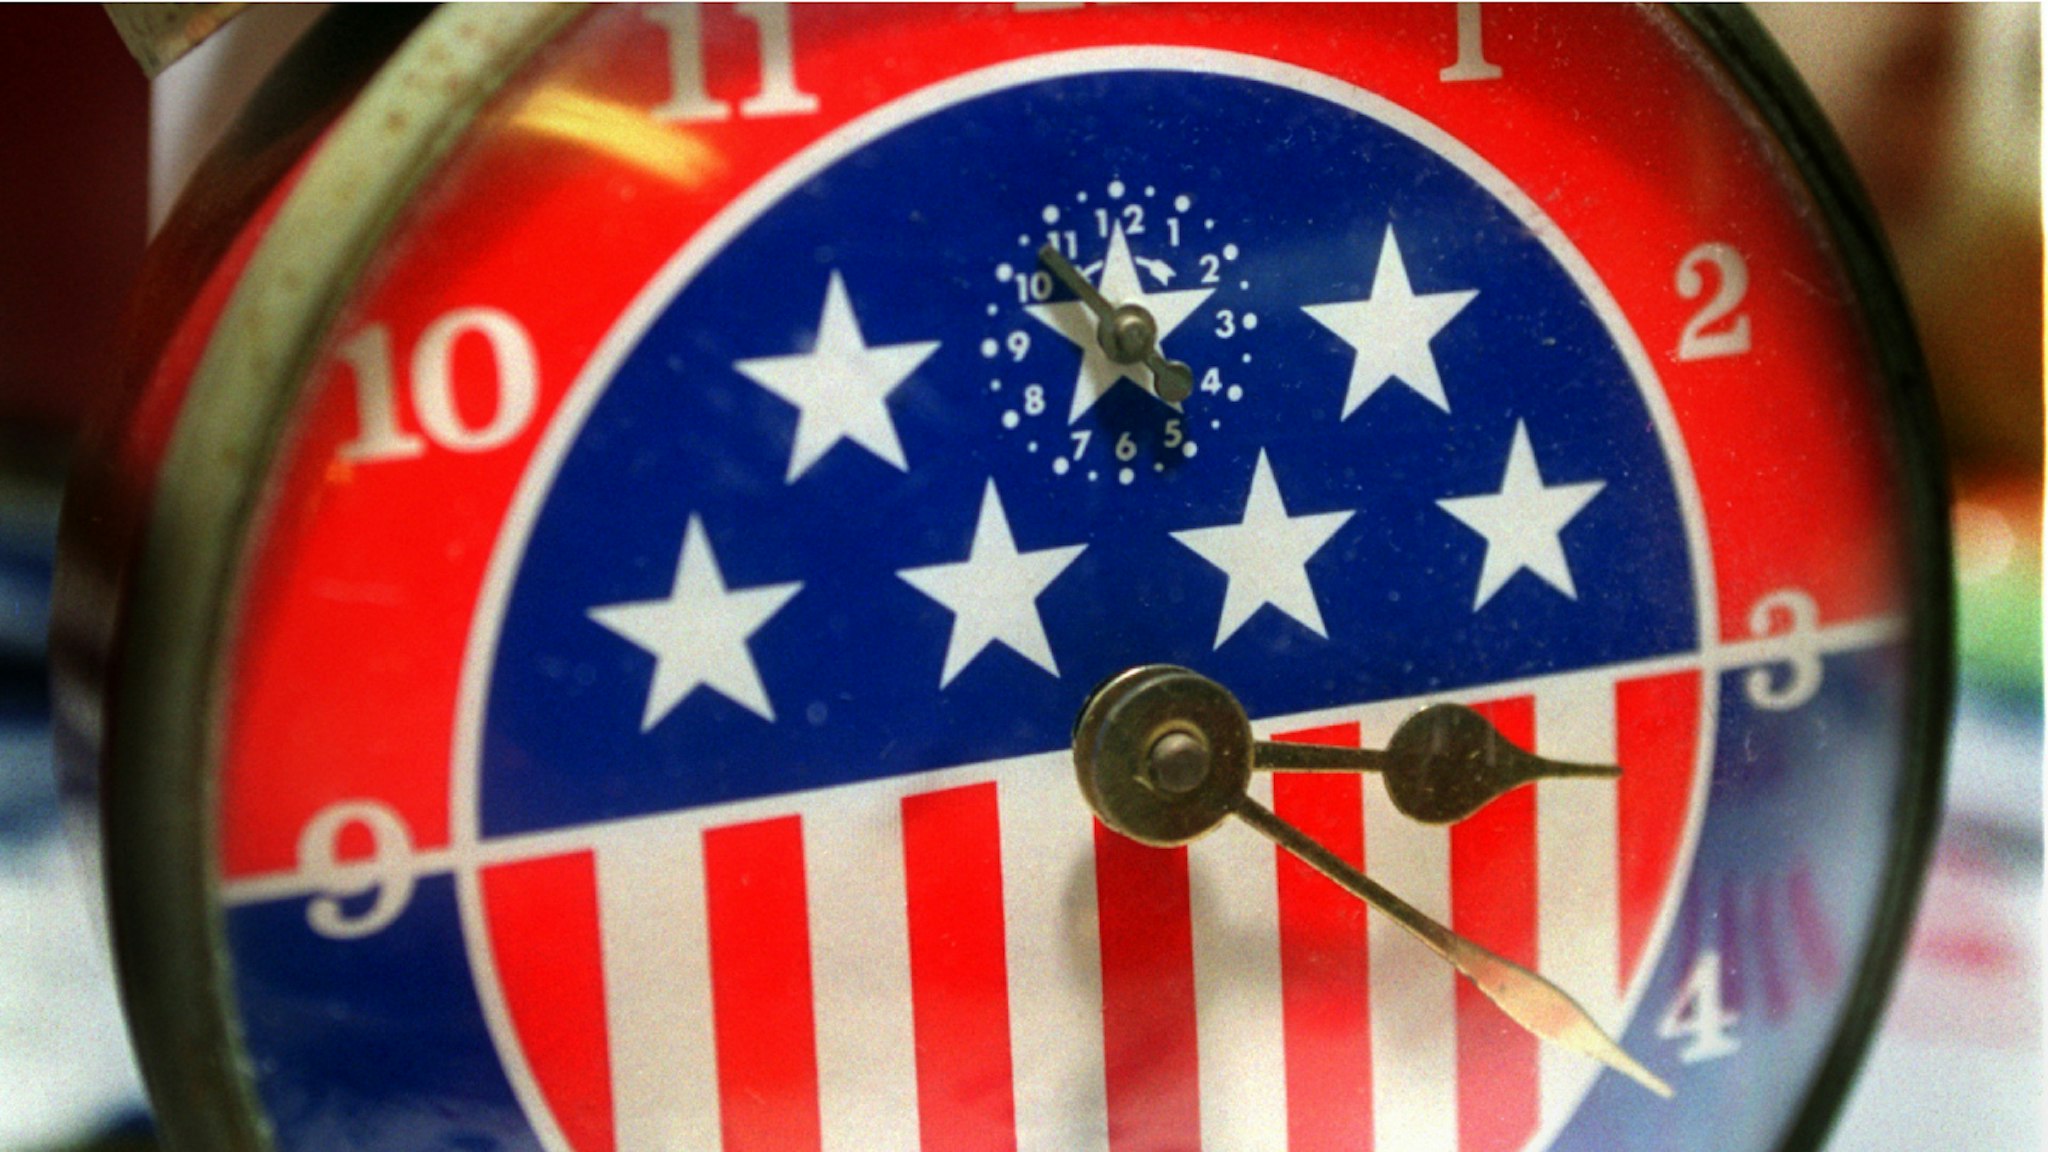 LS.Flag.Clock.DB.6/19/98.Orange.  Wind up alarm clock, 1940's  50's. $85.00. From the large collection of patriotic home decorating memorabilia at American Roots, an antique store on W. Chapman in Orange